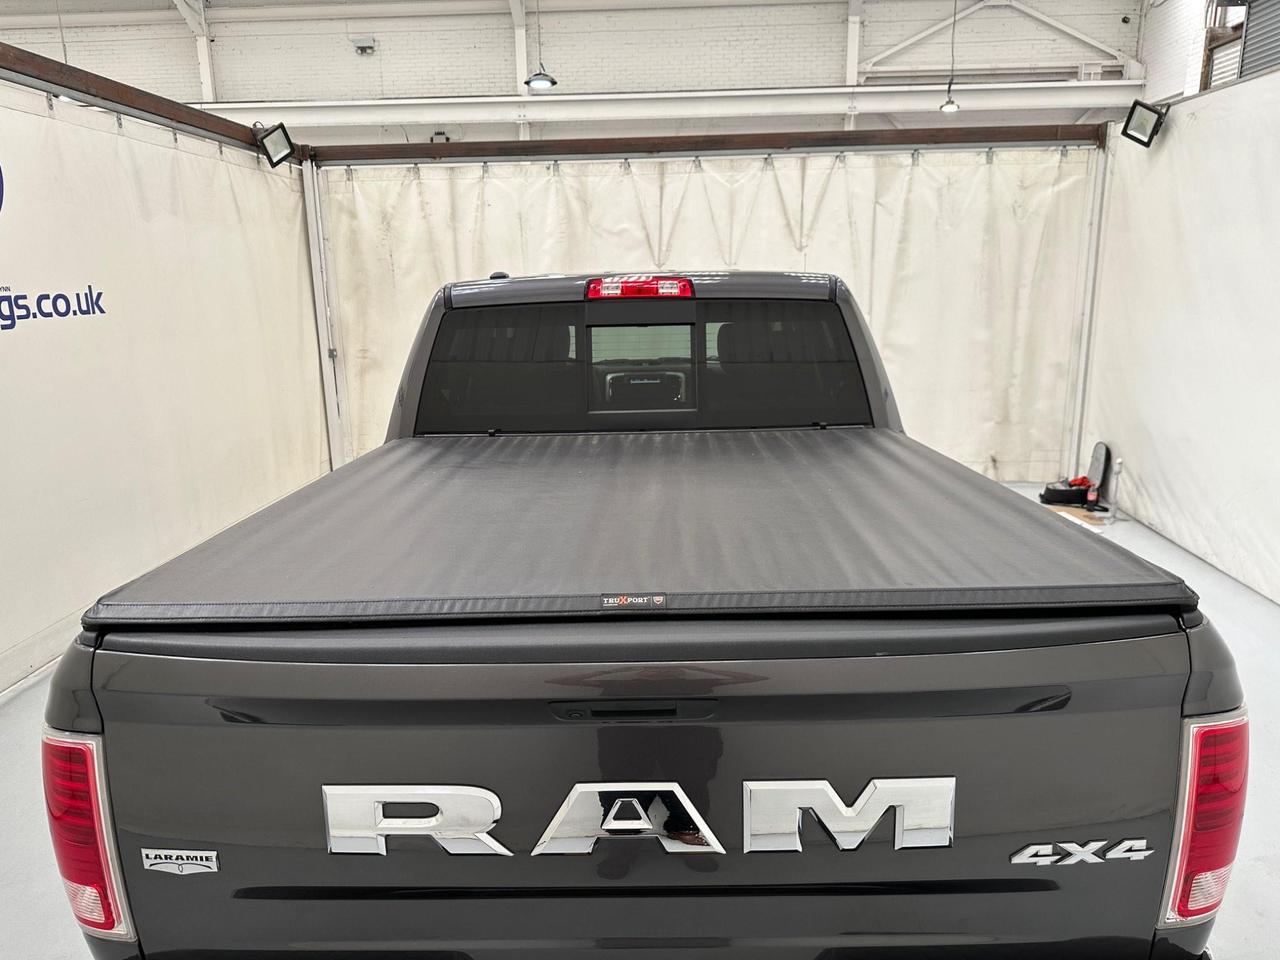 Dodge RAM MX21PLF